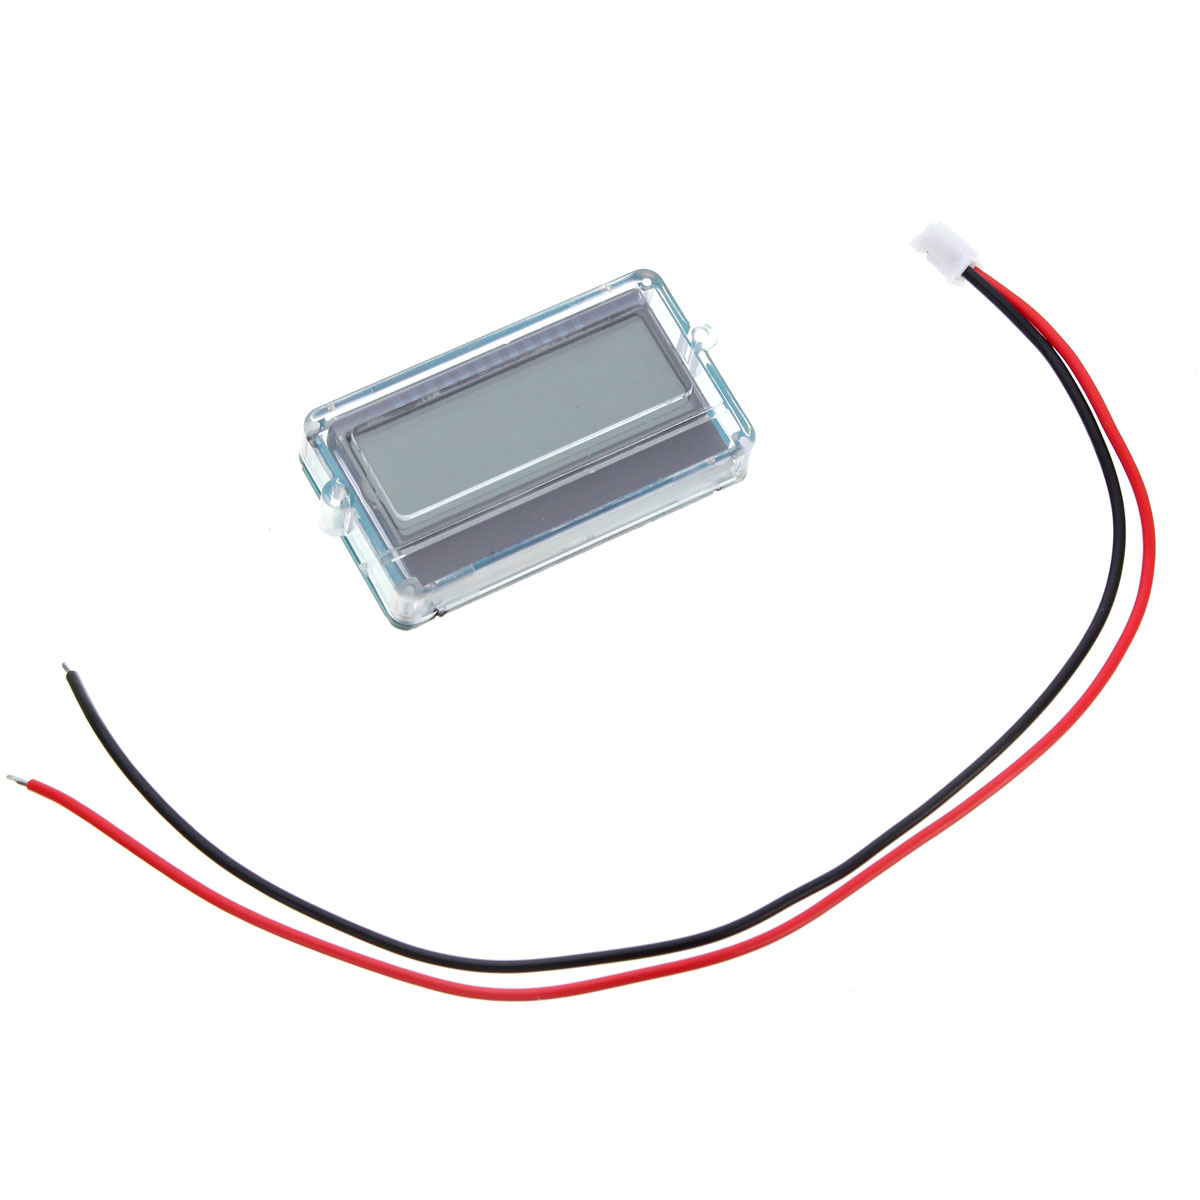 Excellwayreg-Battery-Capacity-Tester-with-LCD-Indicator-for-12V-24V-30V-Lead-acid-Lithium-LiPo-991337-4